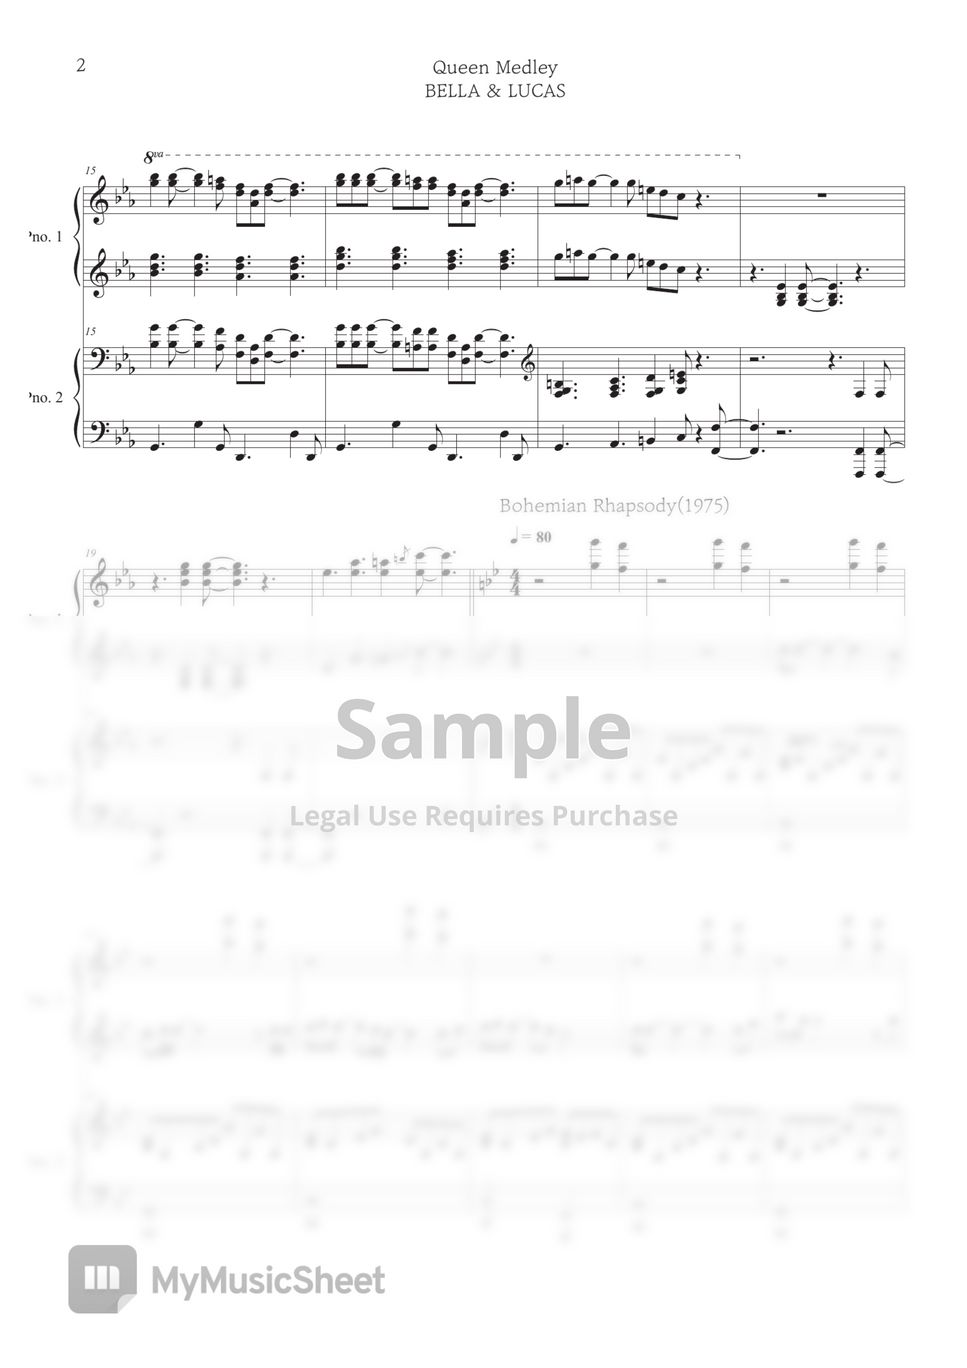 Bohemian Rhapsody OST (4hands piano) - Queen Medley Sheets by BELLA&LUCAS